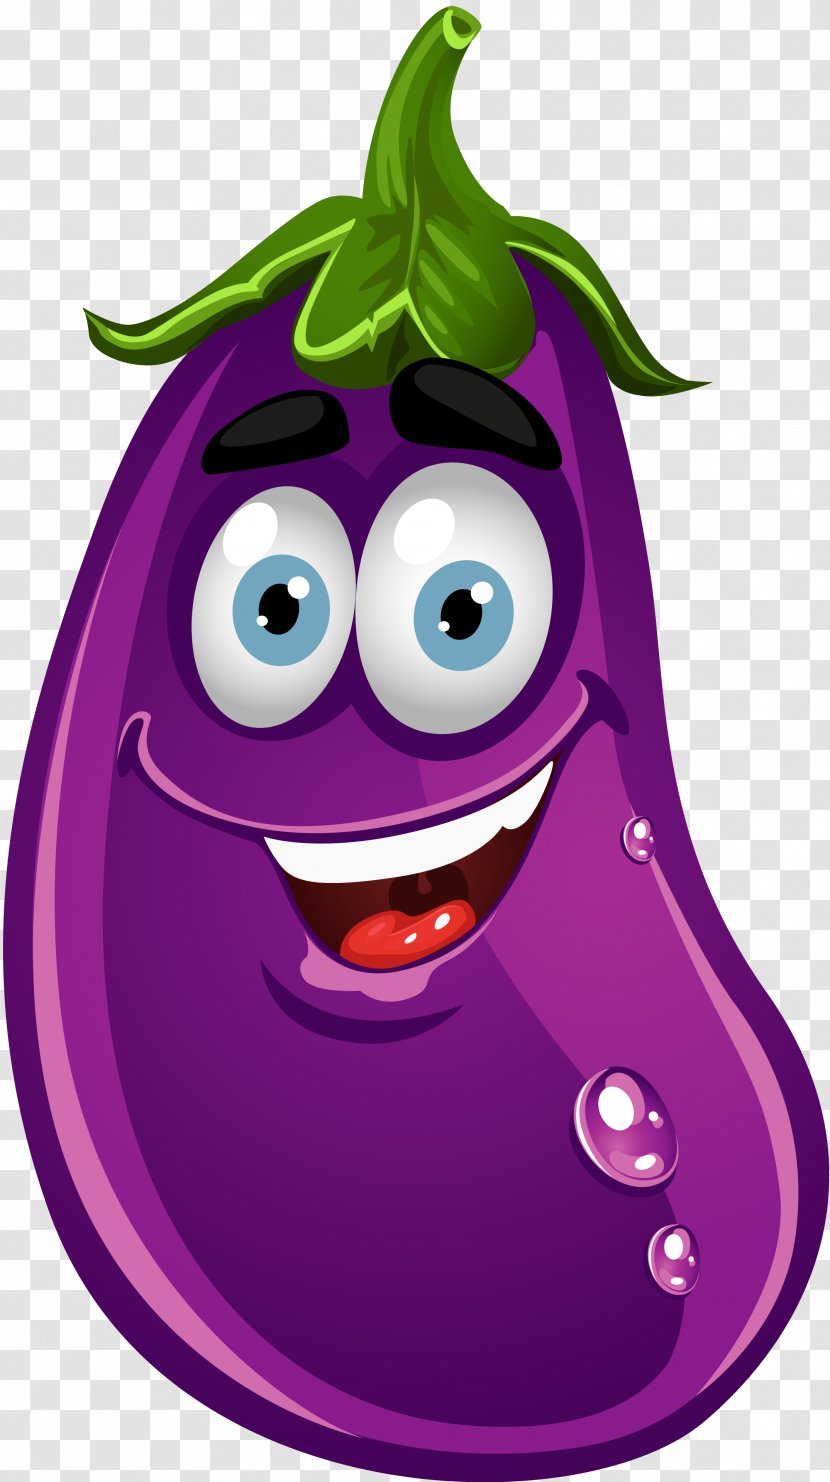 Eggplant Vegetable Cartoon Clip Art - Tomato Transparent PNG